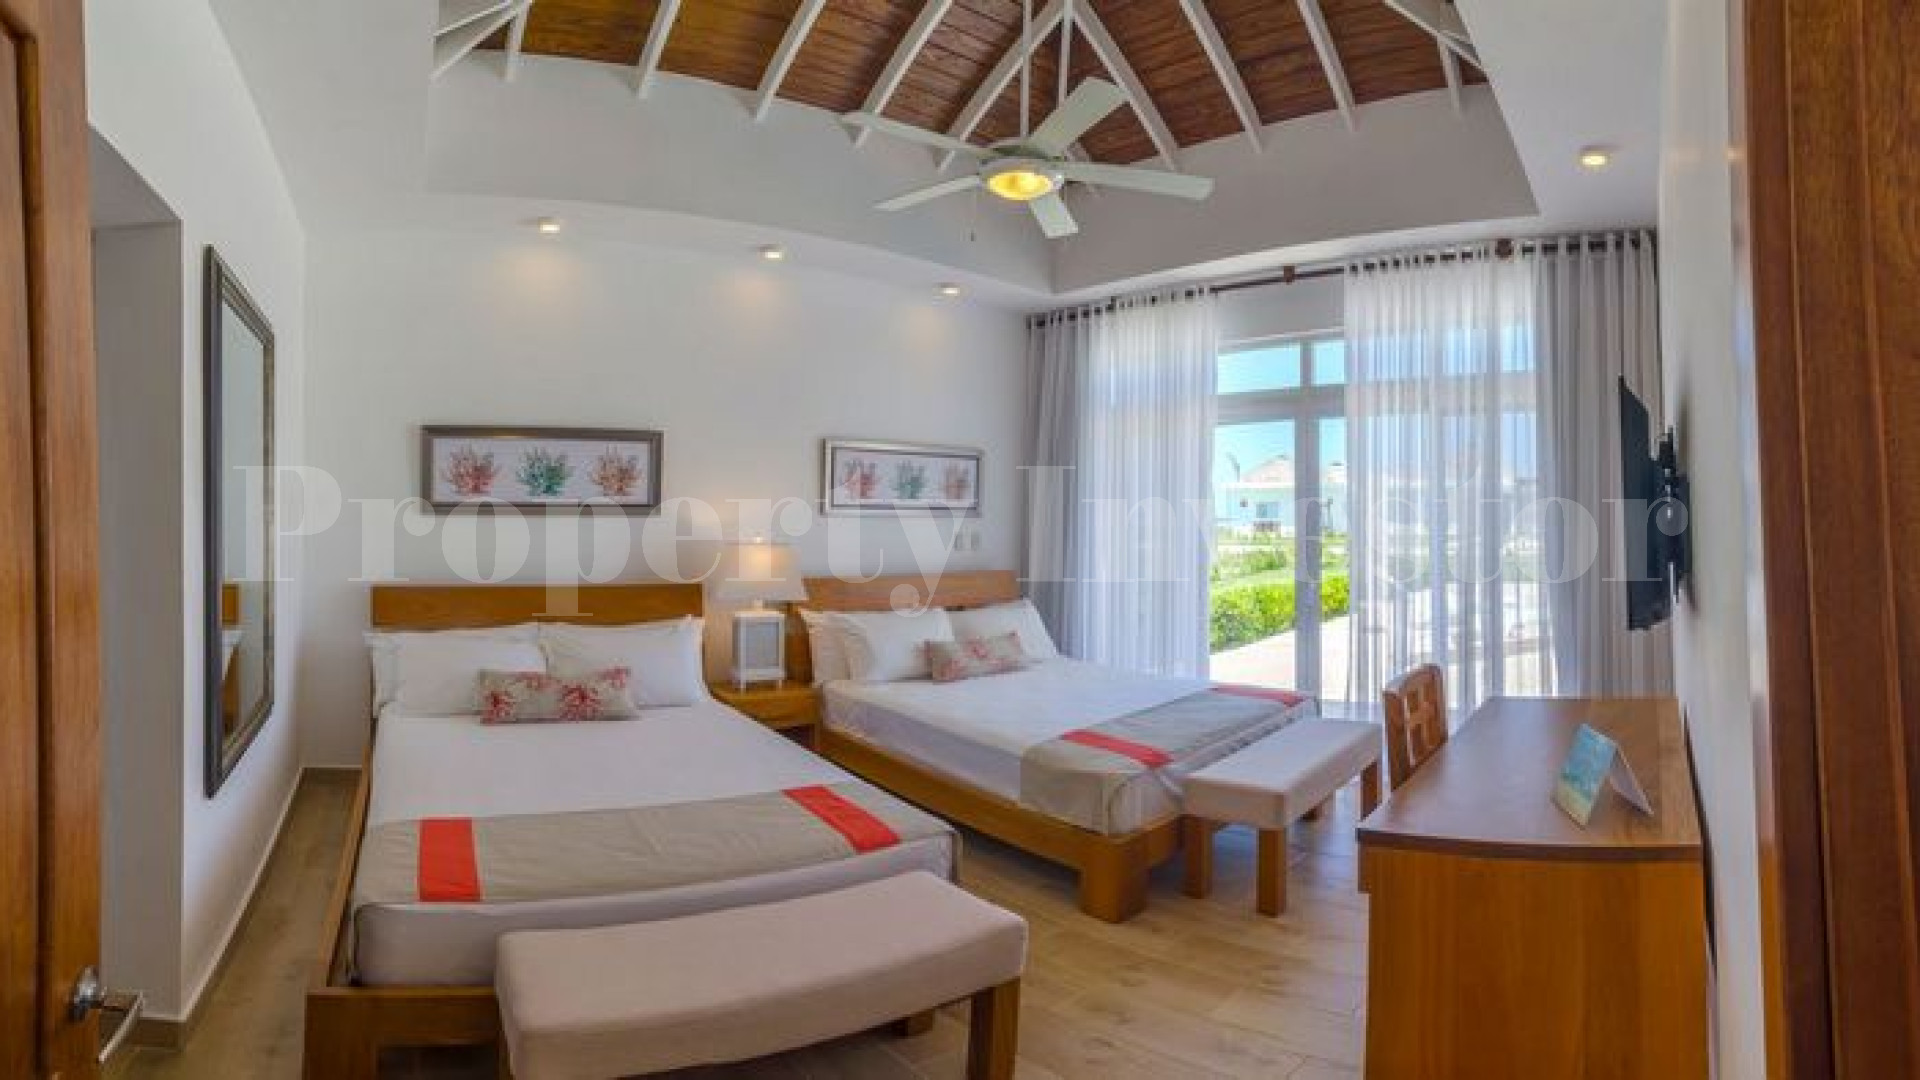 2 Bedroom Oceanview Villa in the Dominican Republic with 30 Year Financing (Villa 18)